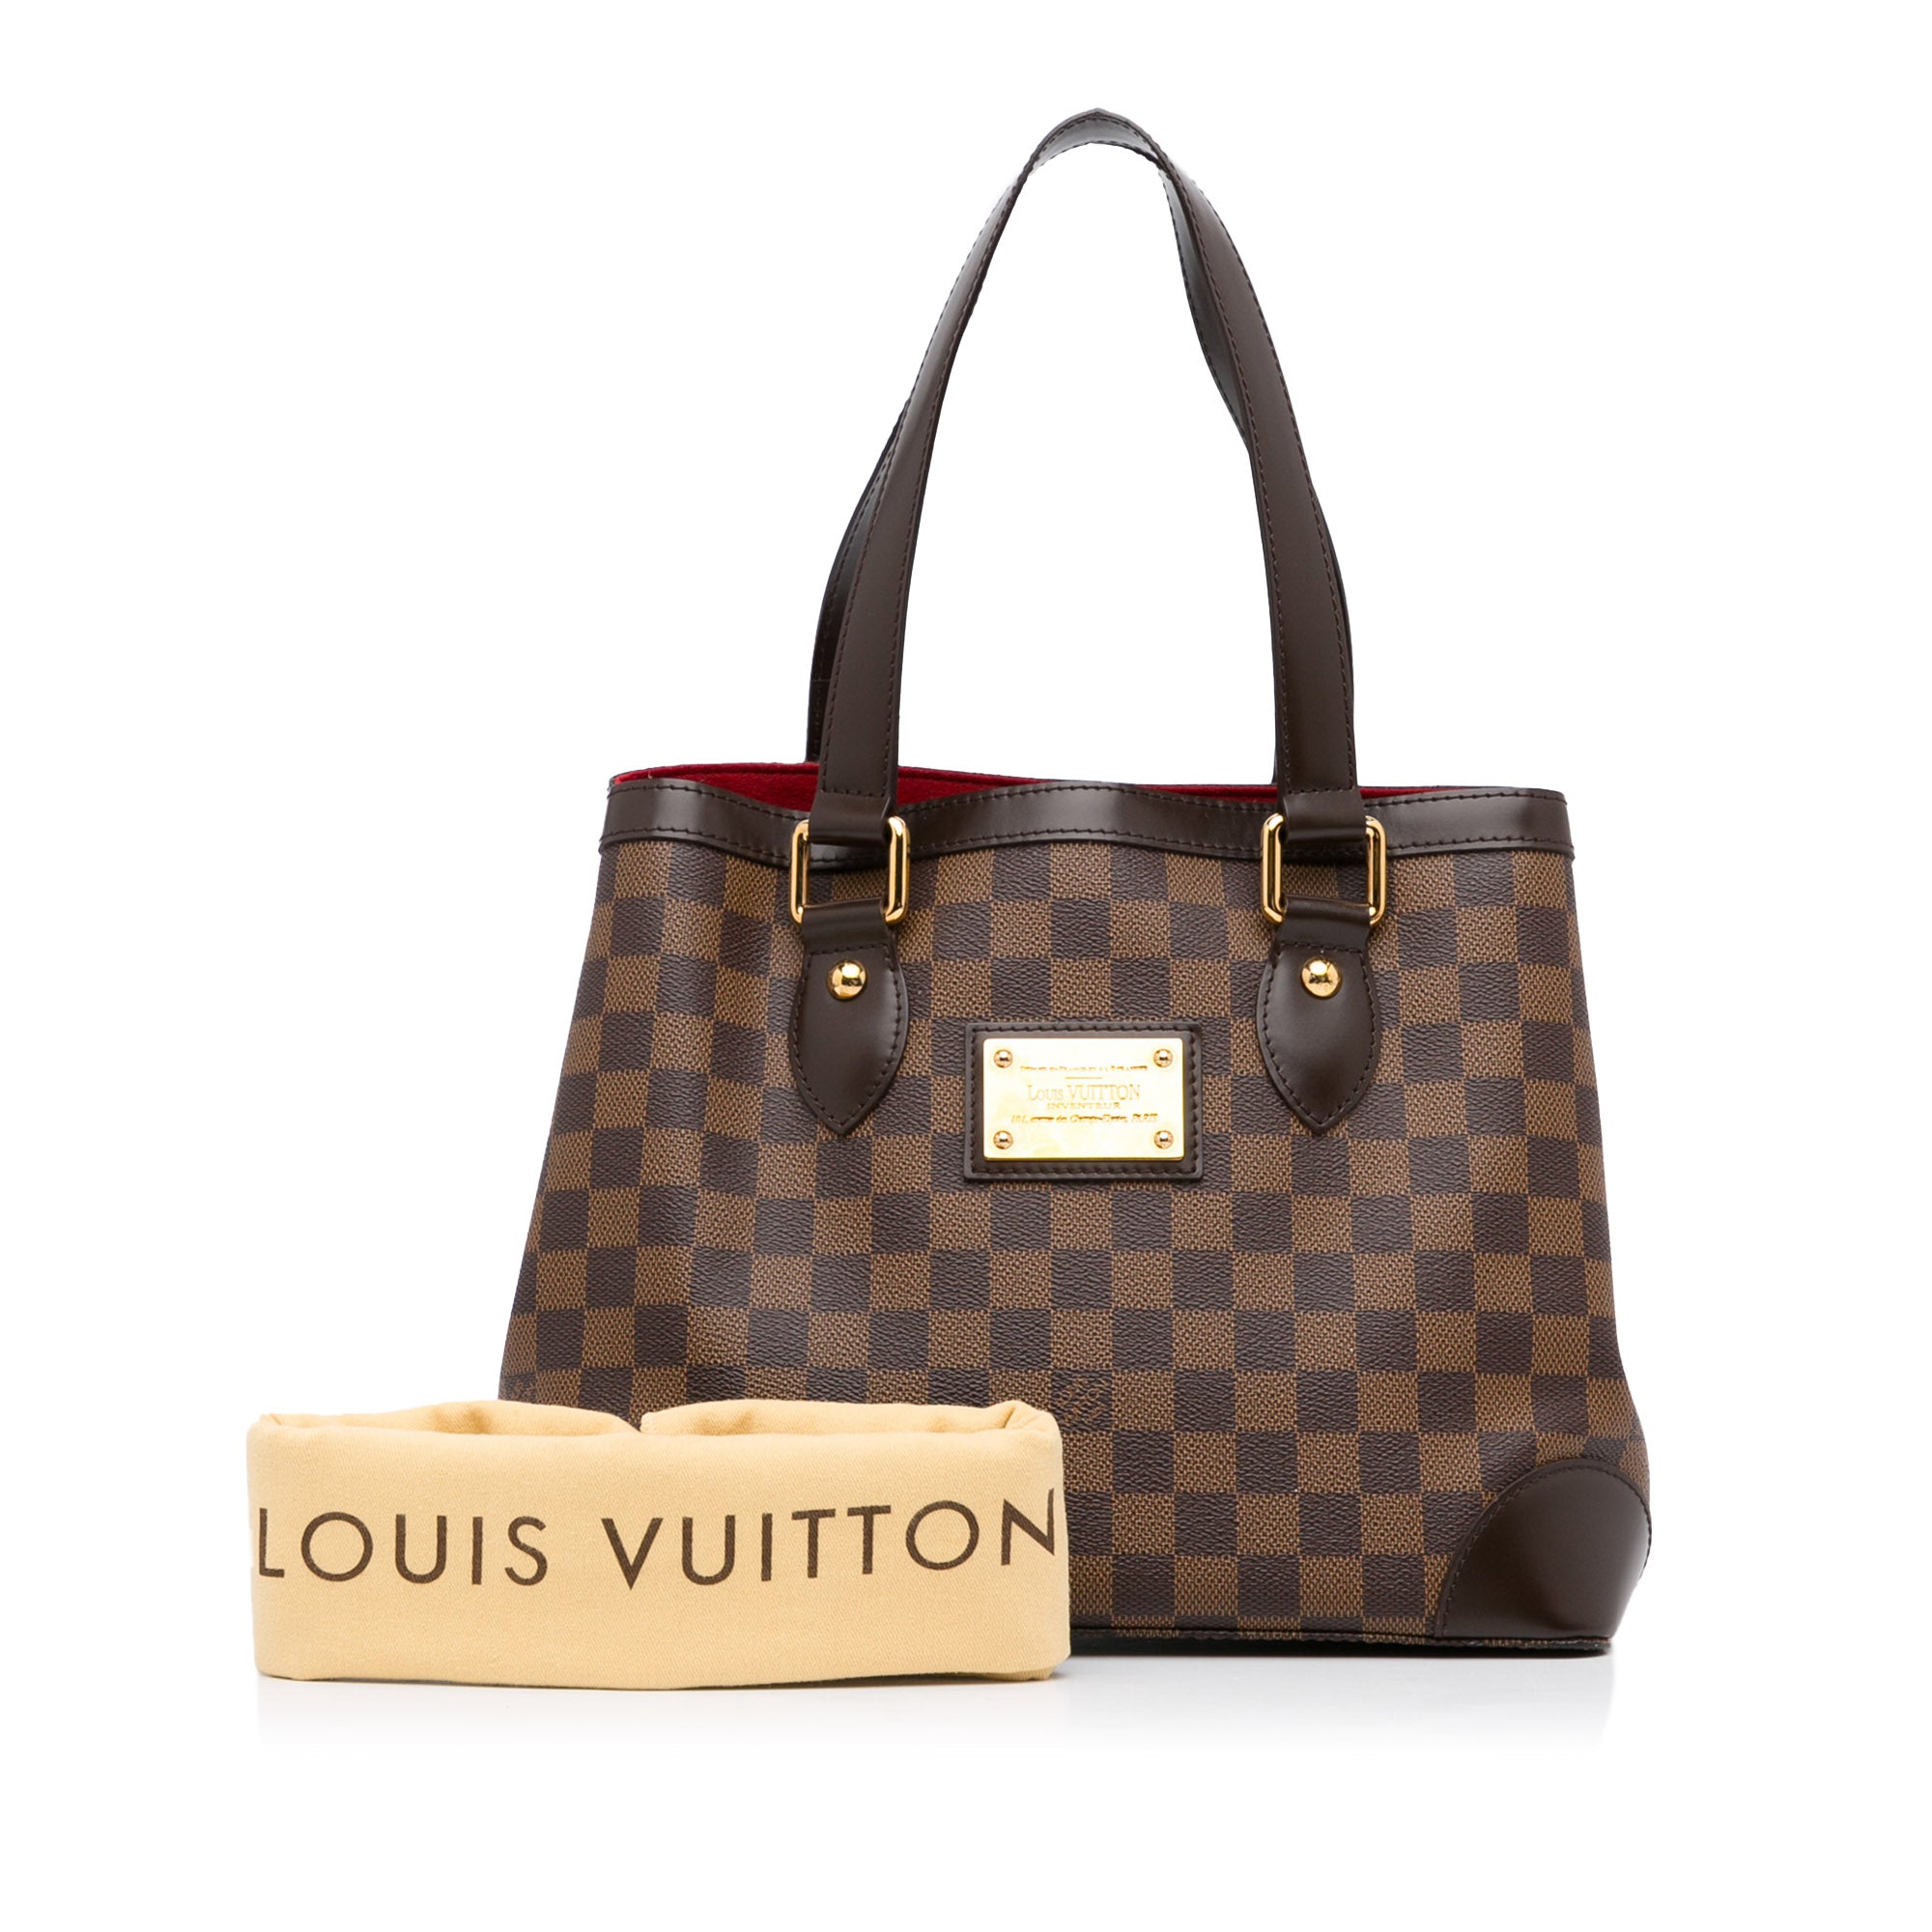 Louis Vuitton Hampstead Bag: The Mini Travel Accessory  Louis vuitton,  Cheap louis vuitton bags, Louis vuitton bag